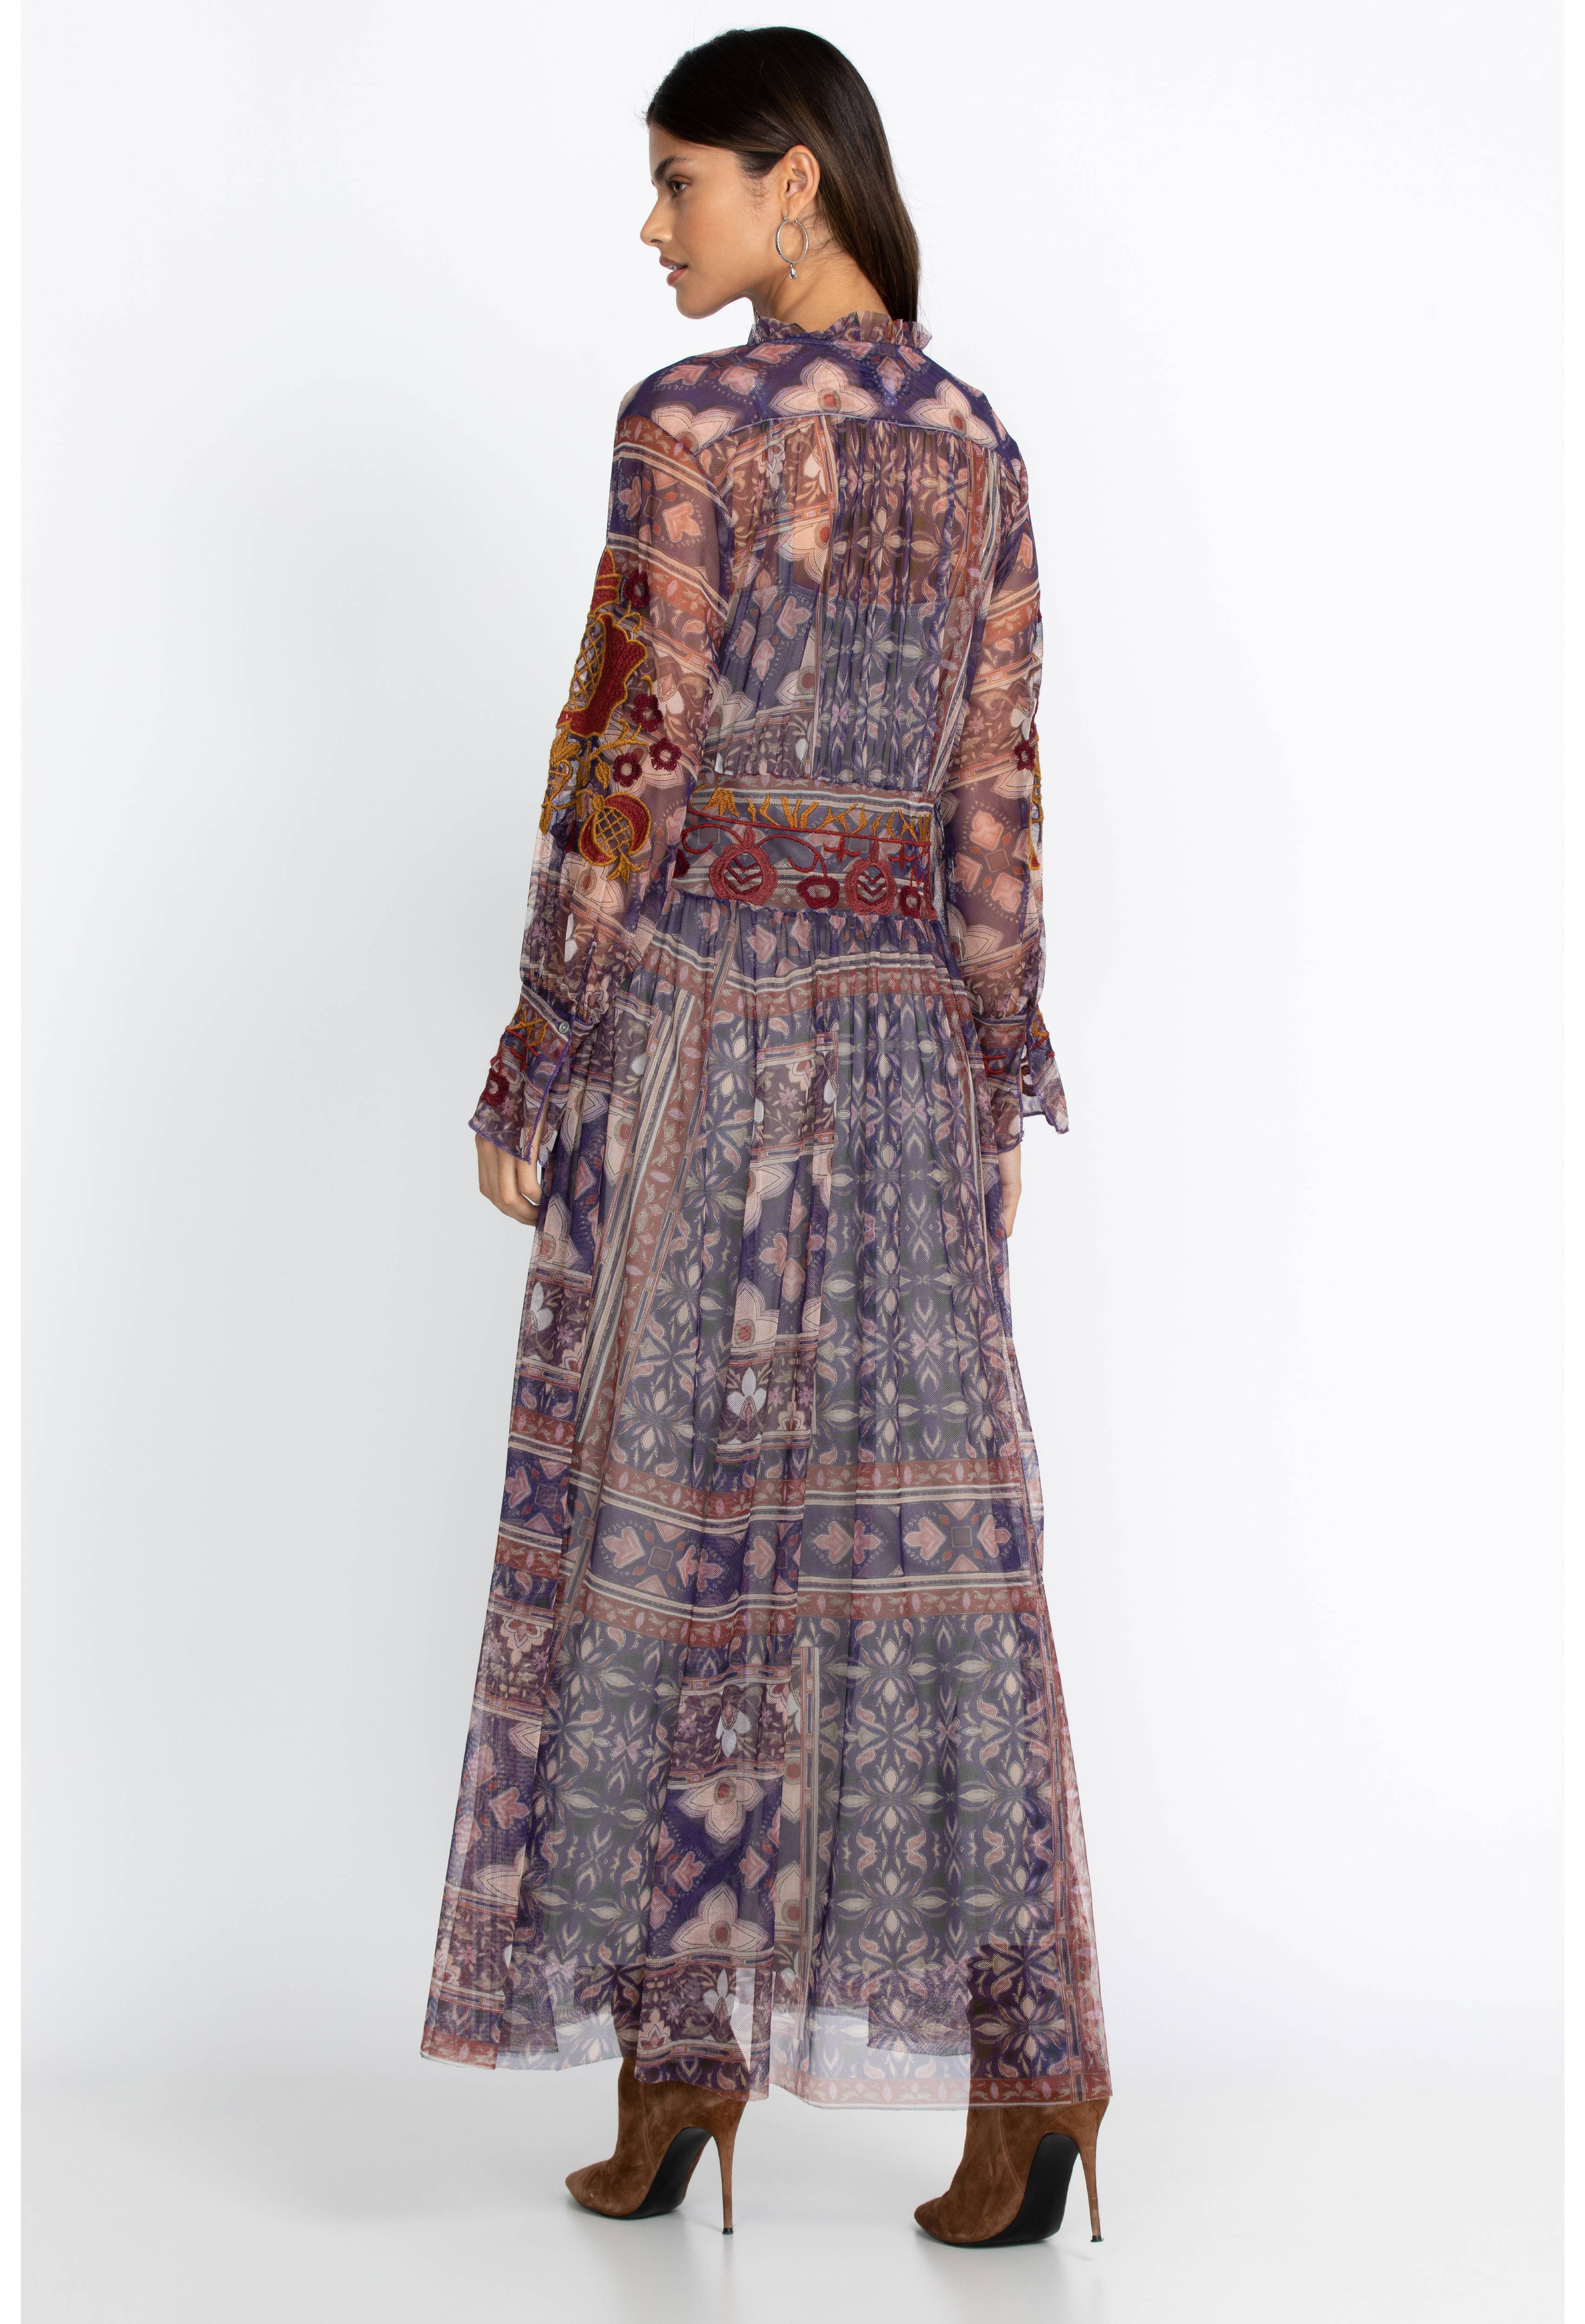 Duana Mesh Dress, , large image number 3